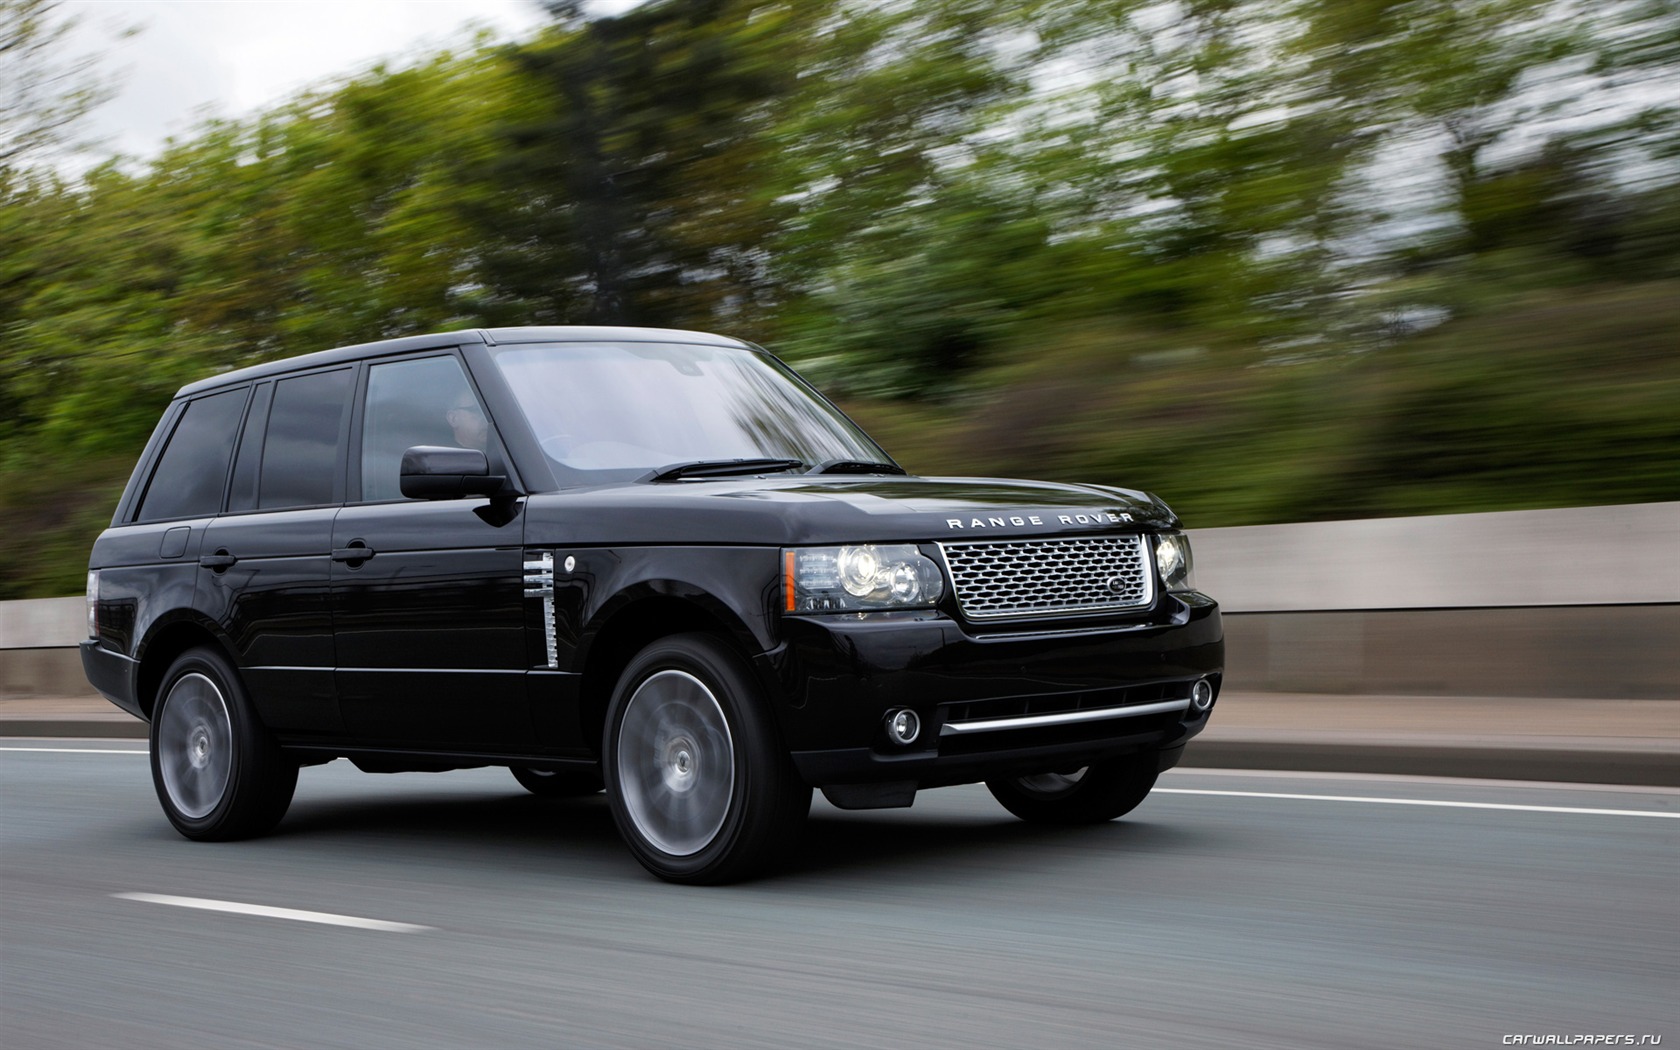 Land Rover Range Rover Black Edition - 2011 路虎16 - 1680x1050